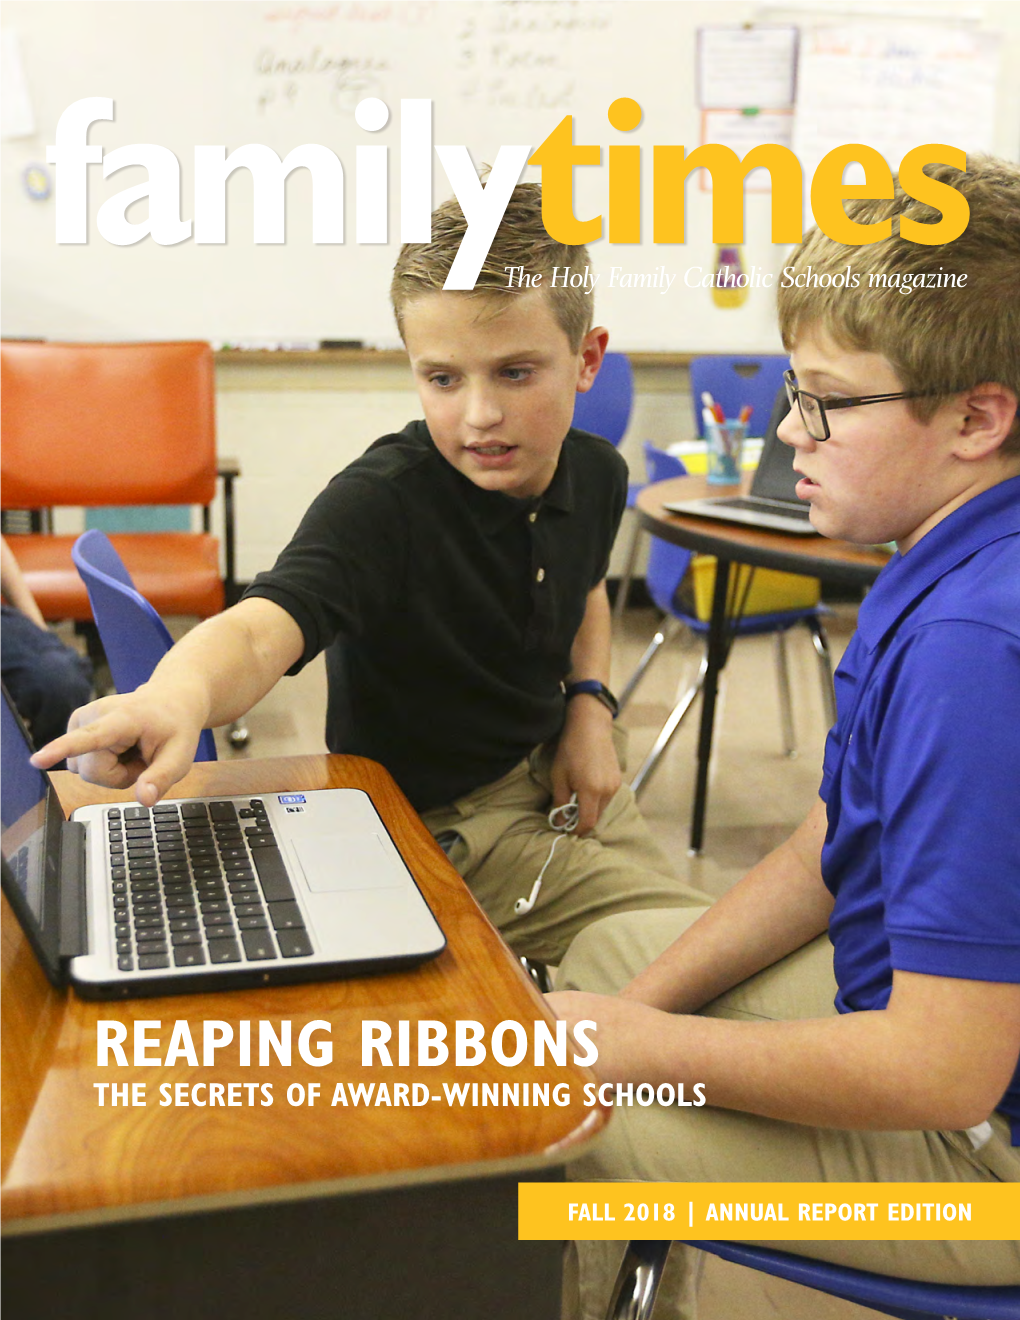 Reaping Ribbons the Secrets of Award-Winning Schools